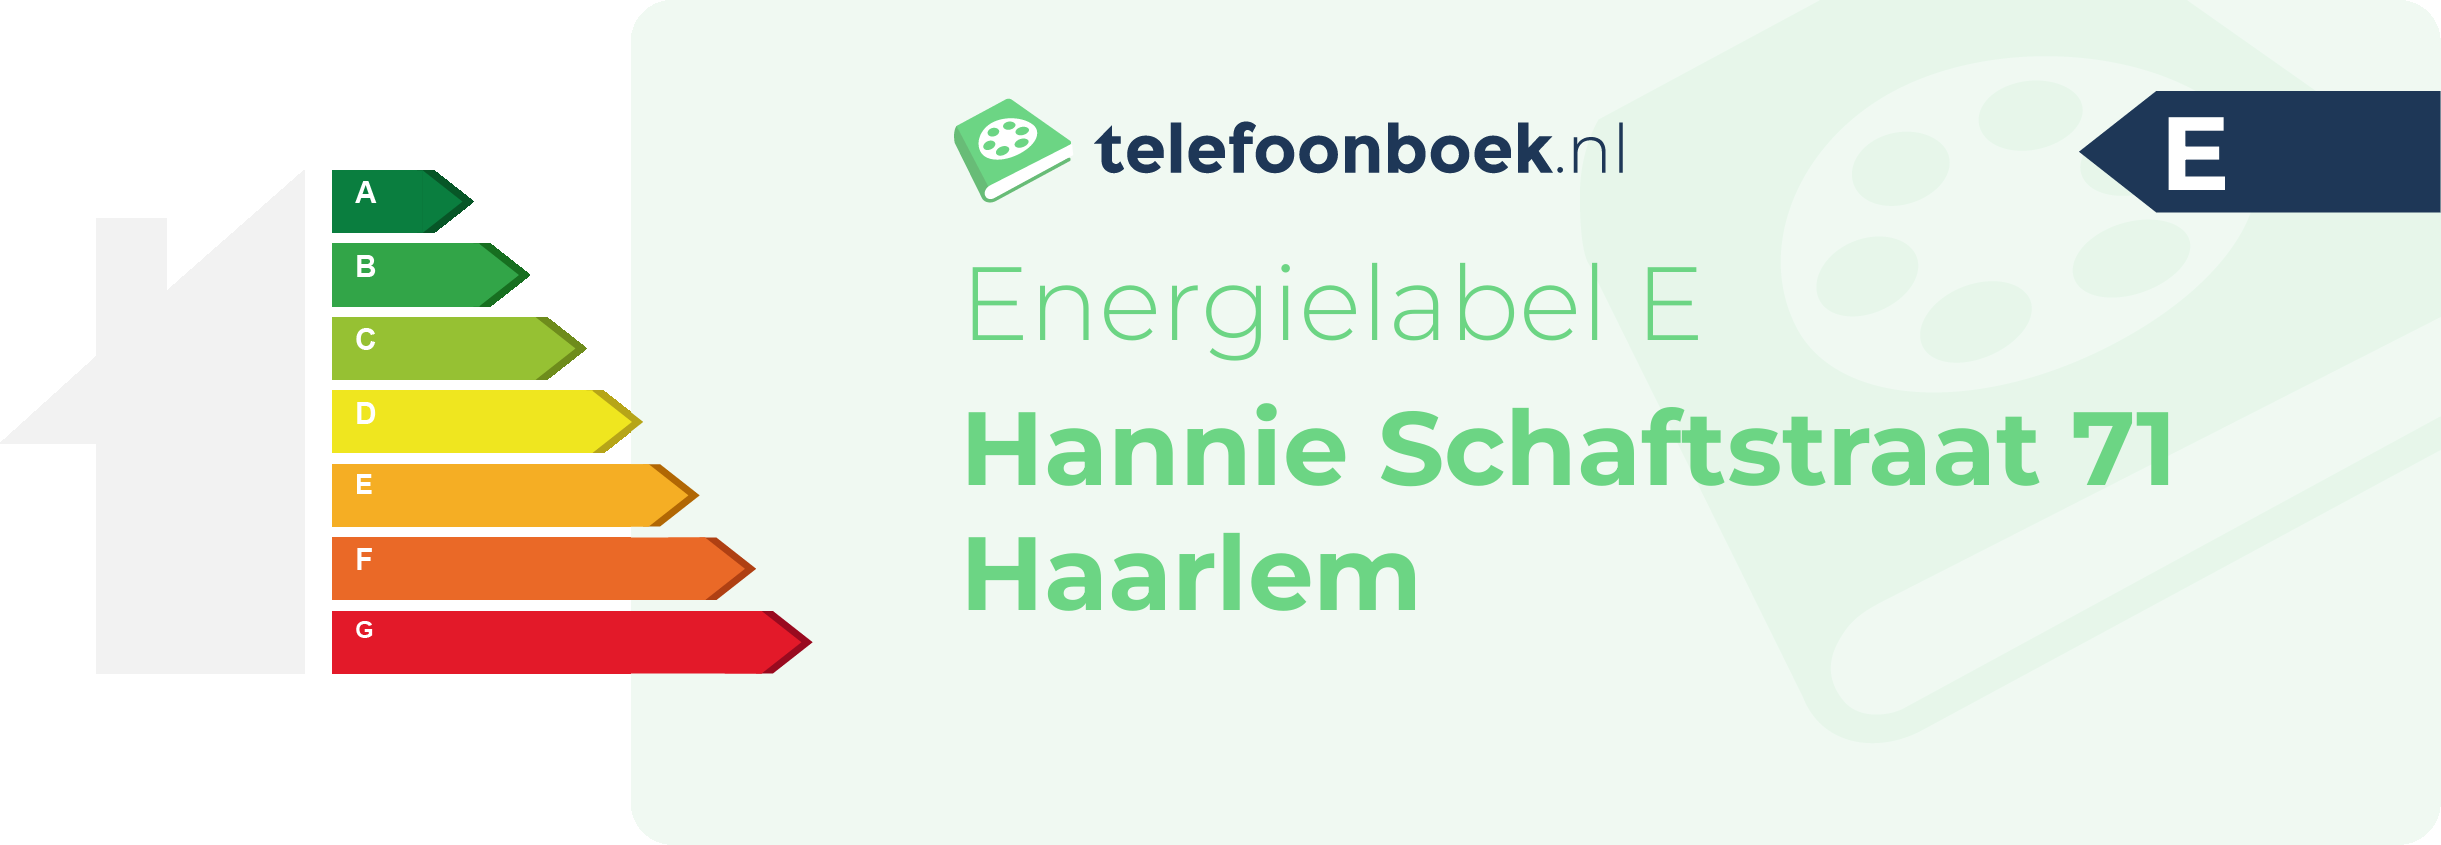 Energielabel Hannie Schaftstraat 71 Haarlem